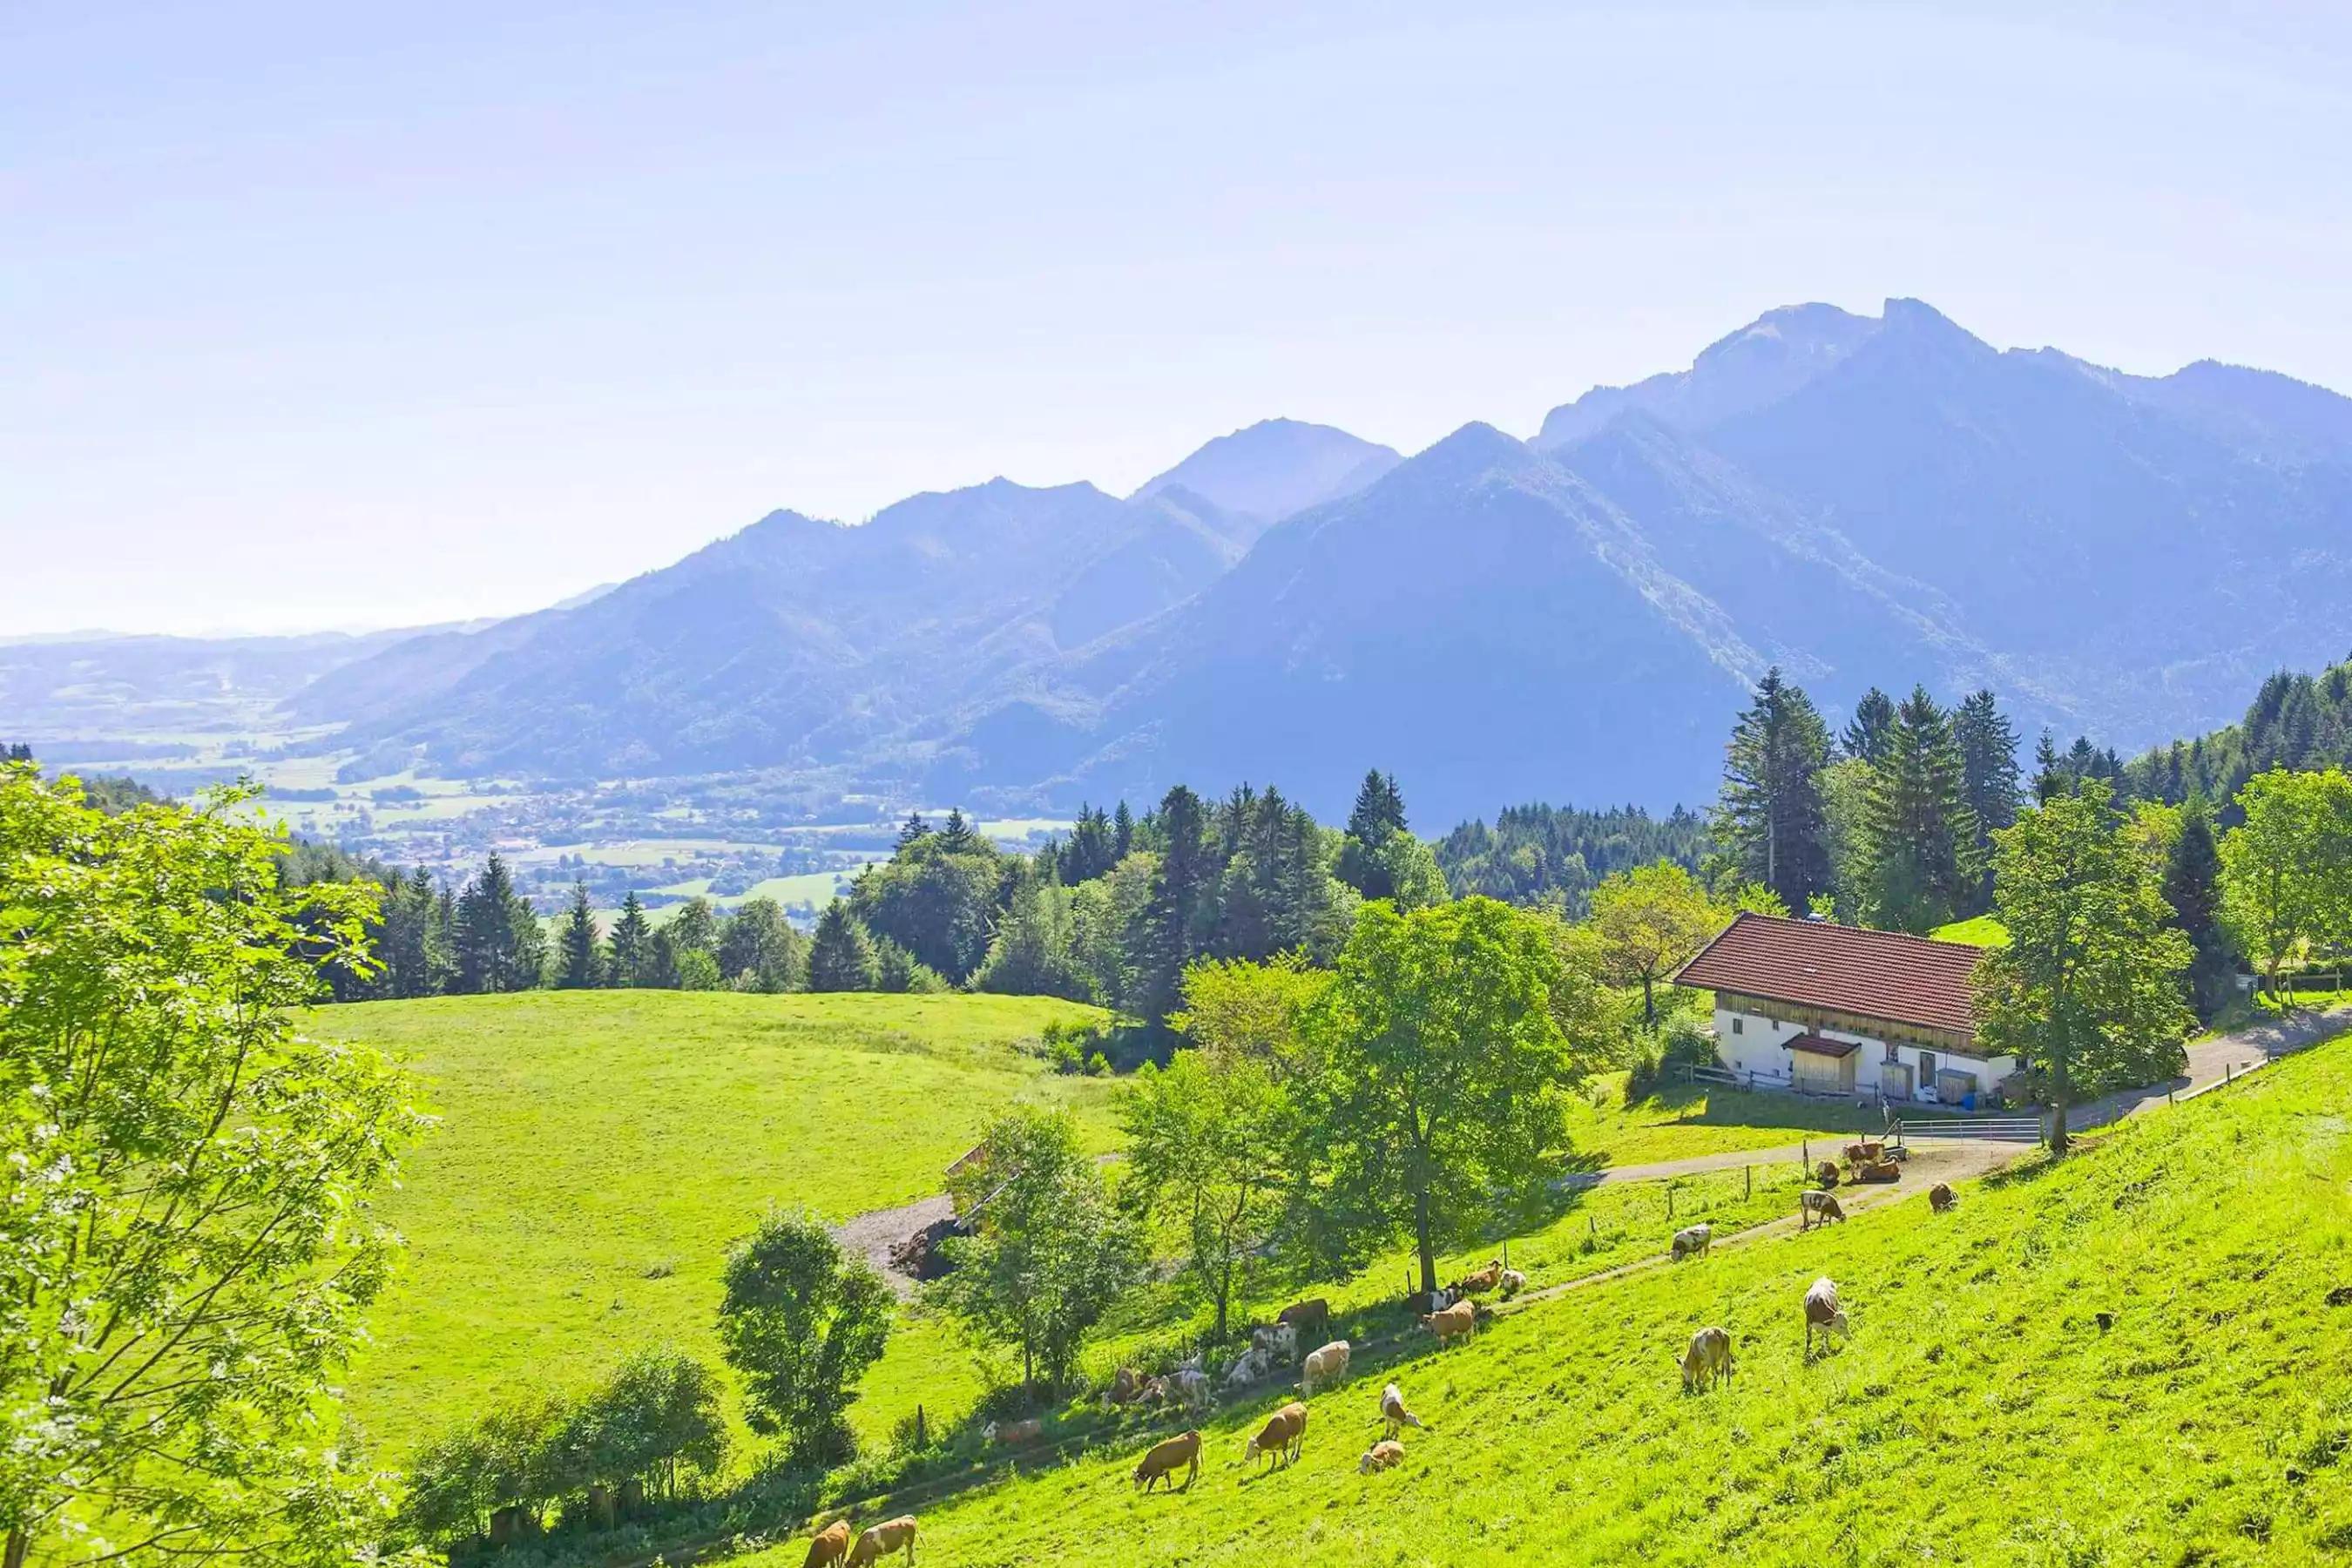 Natur hautnah erleben in der Bergwelt Bayern